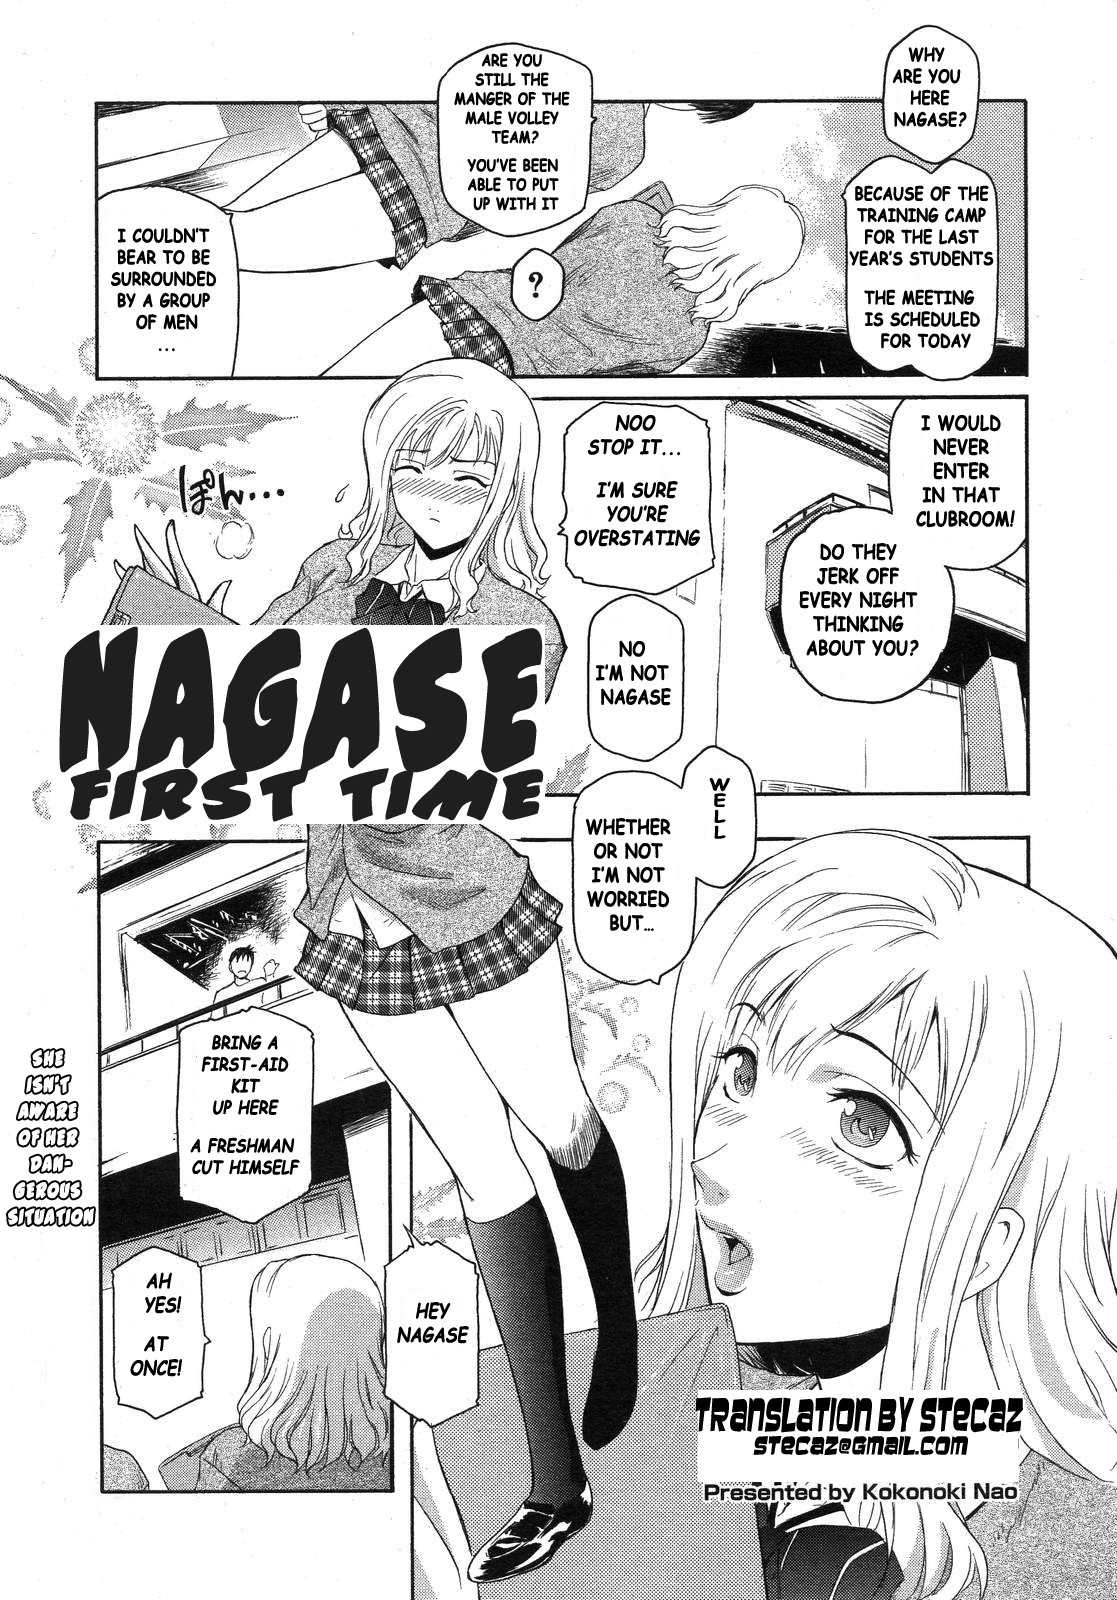 [Kokonoki Nao] Nagase First Time (English) 